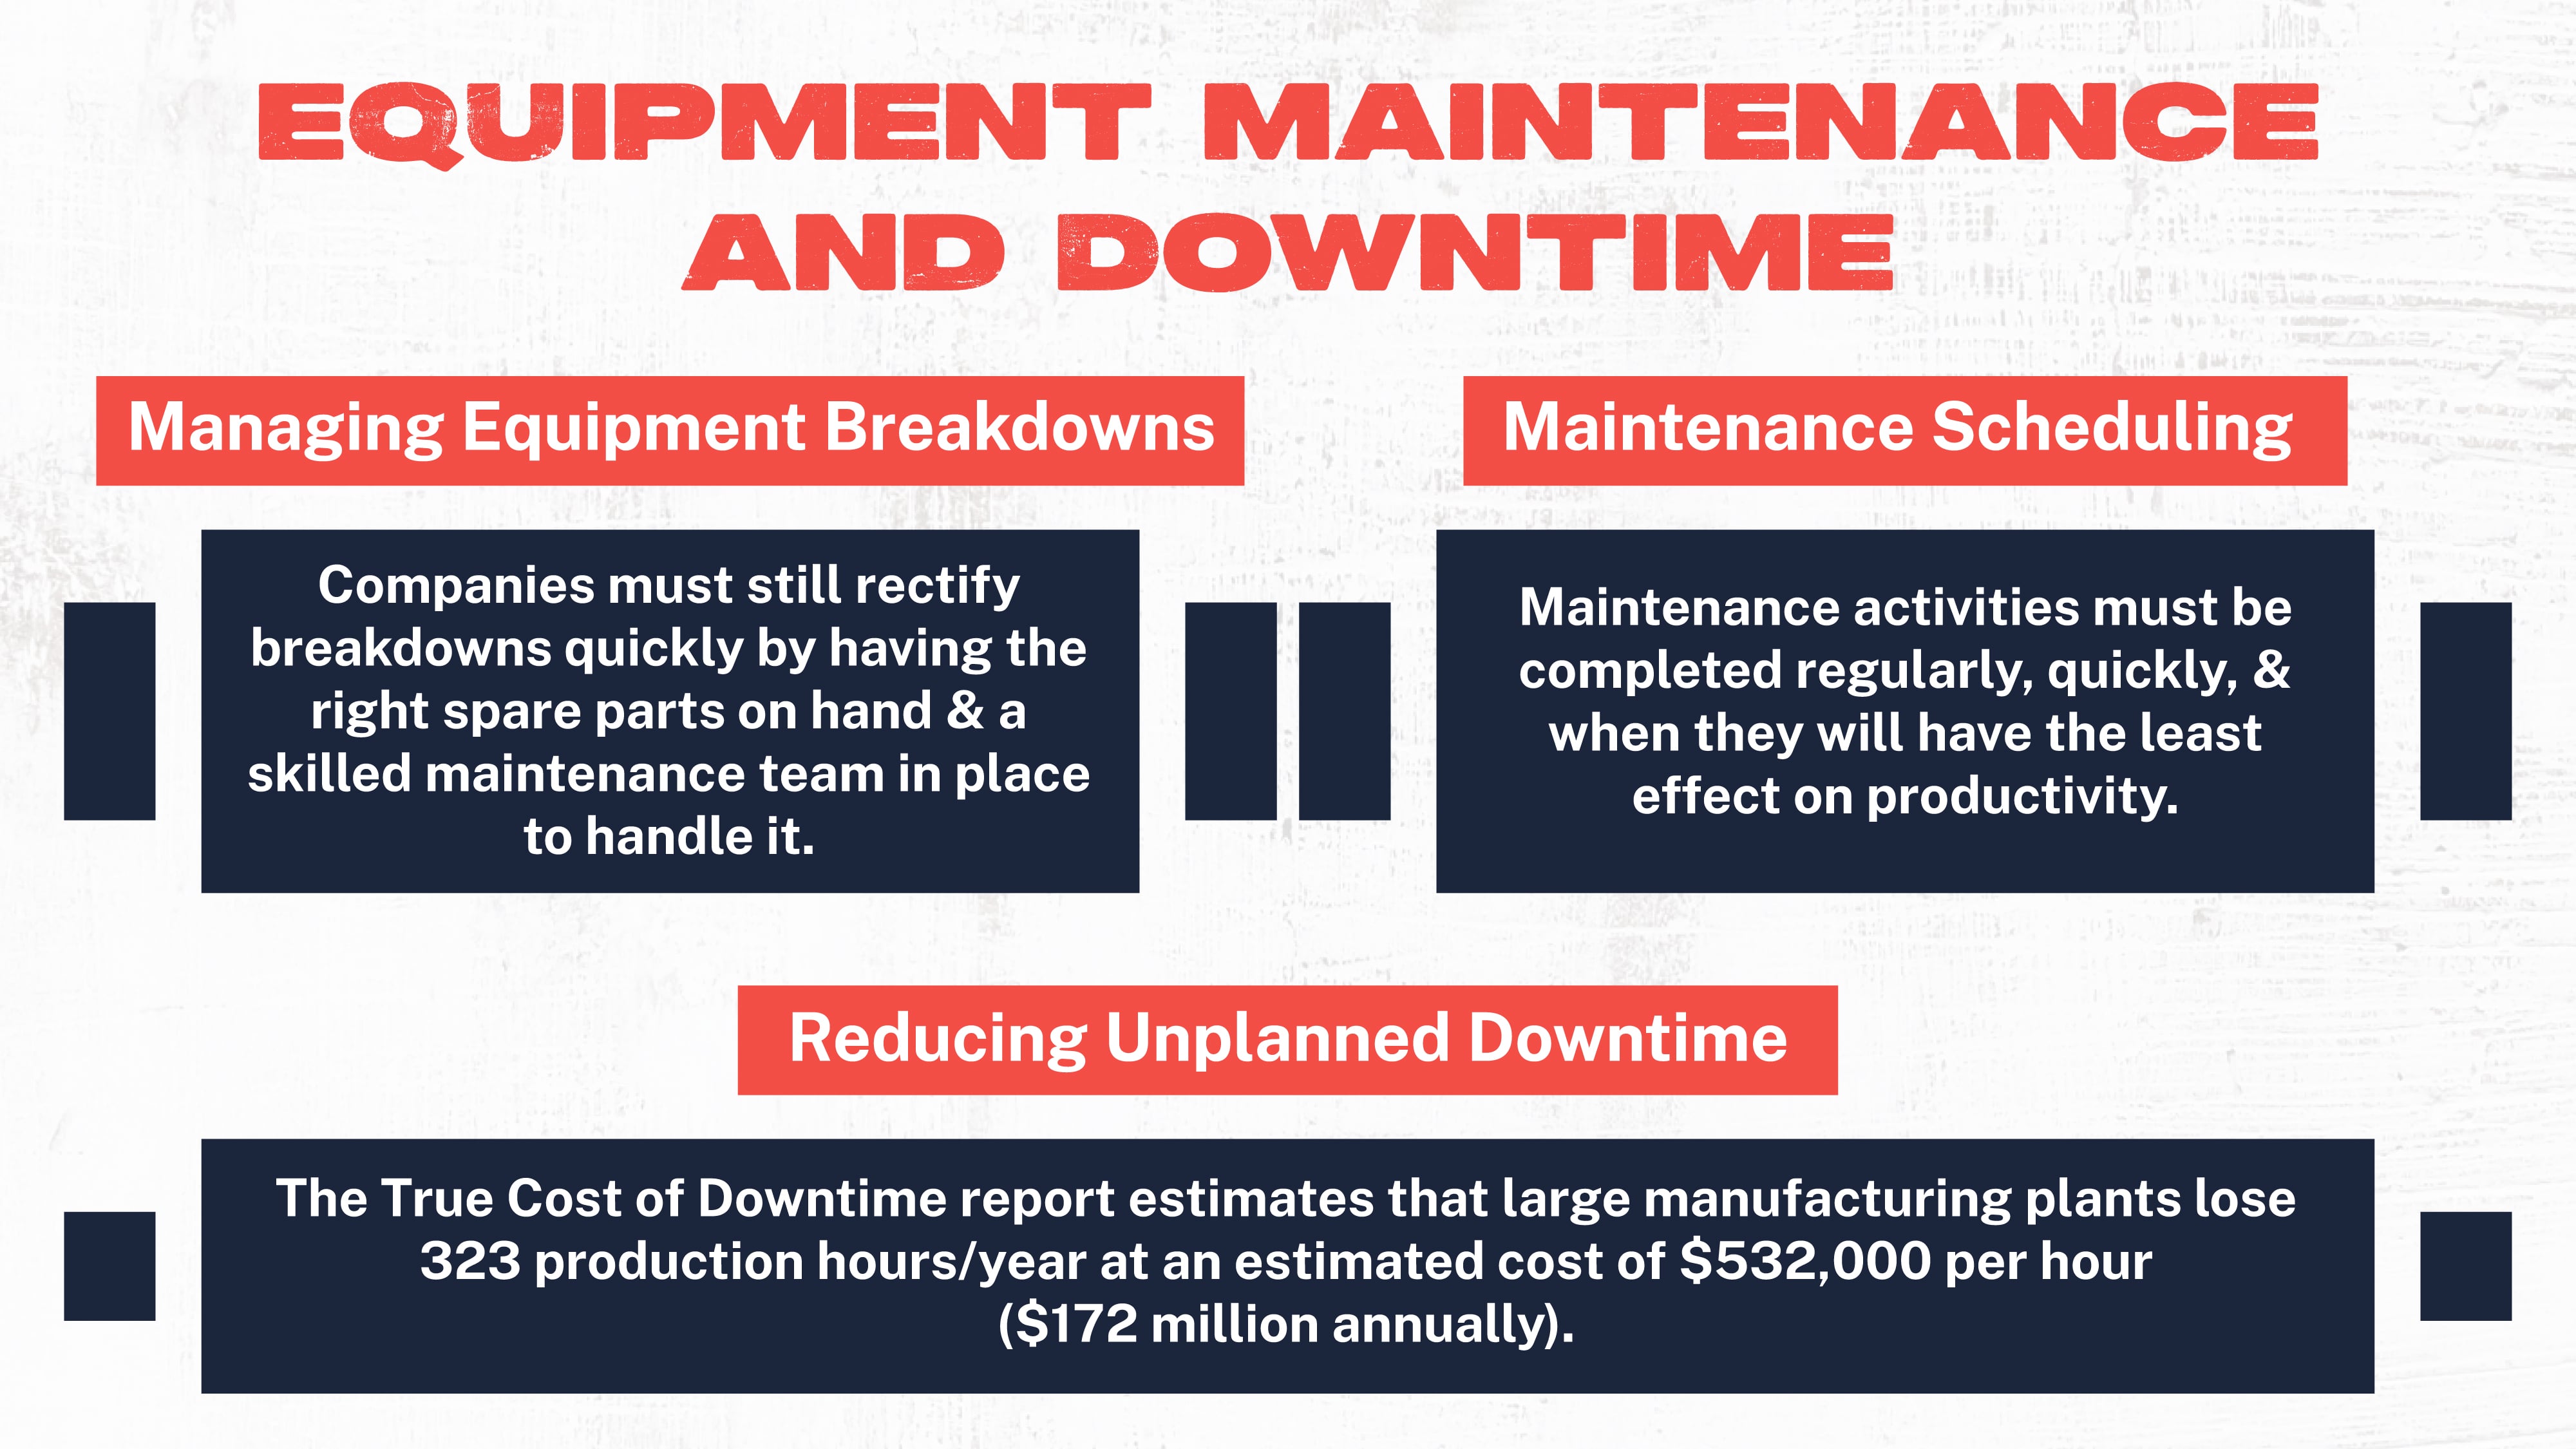 Equipment Maintenance & Downtime